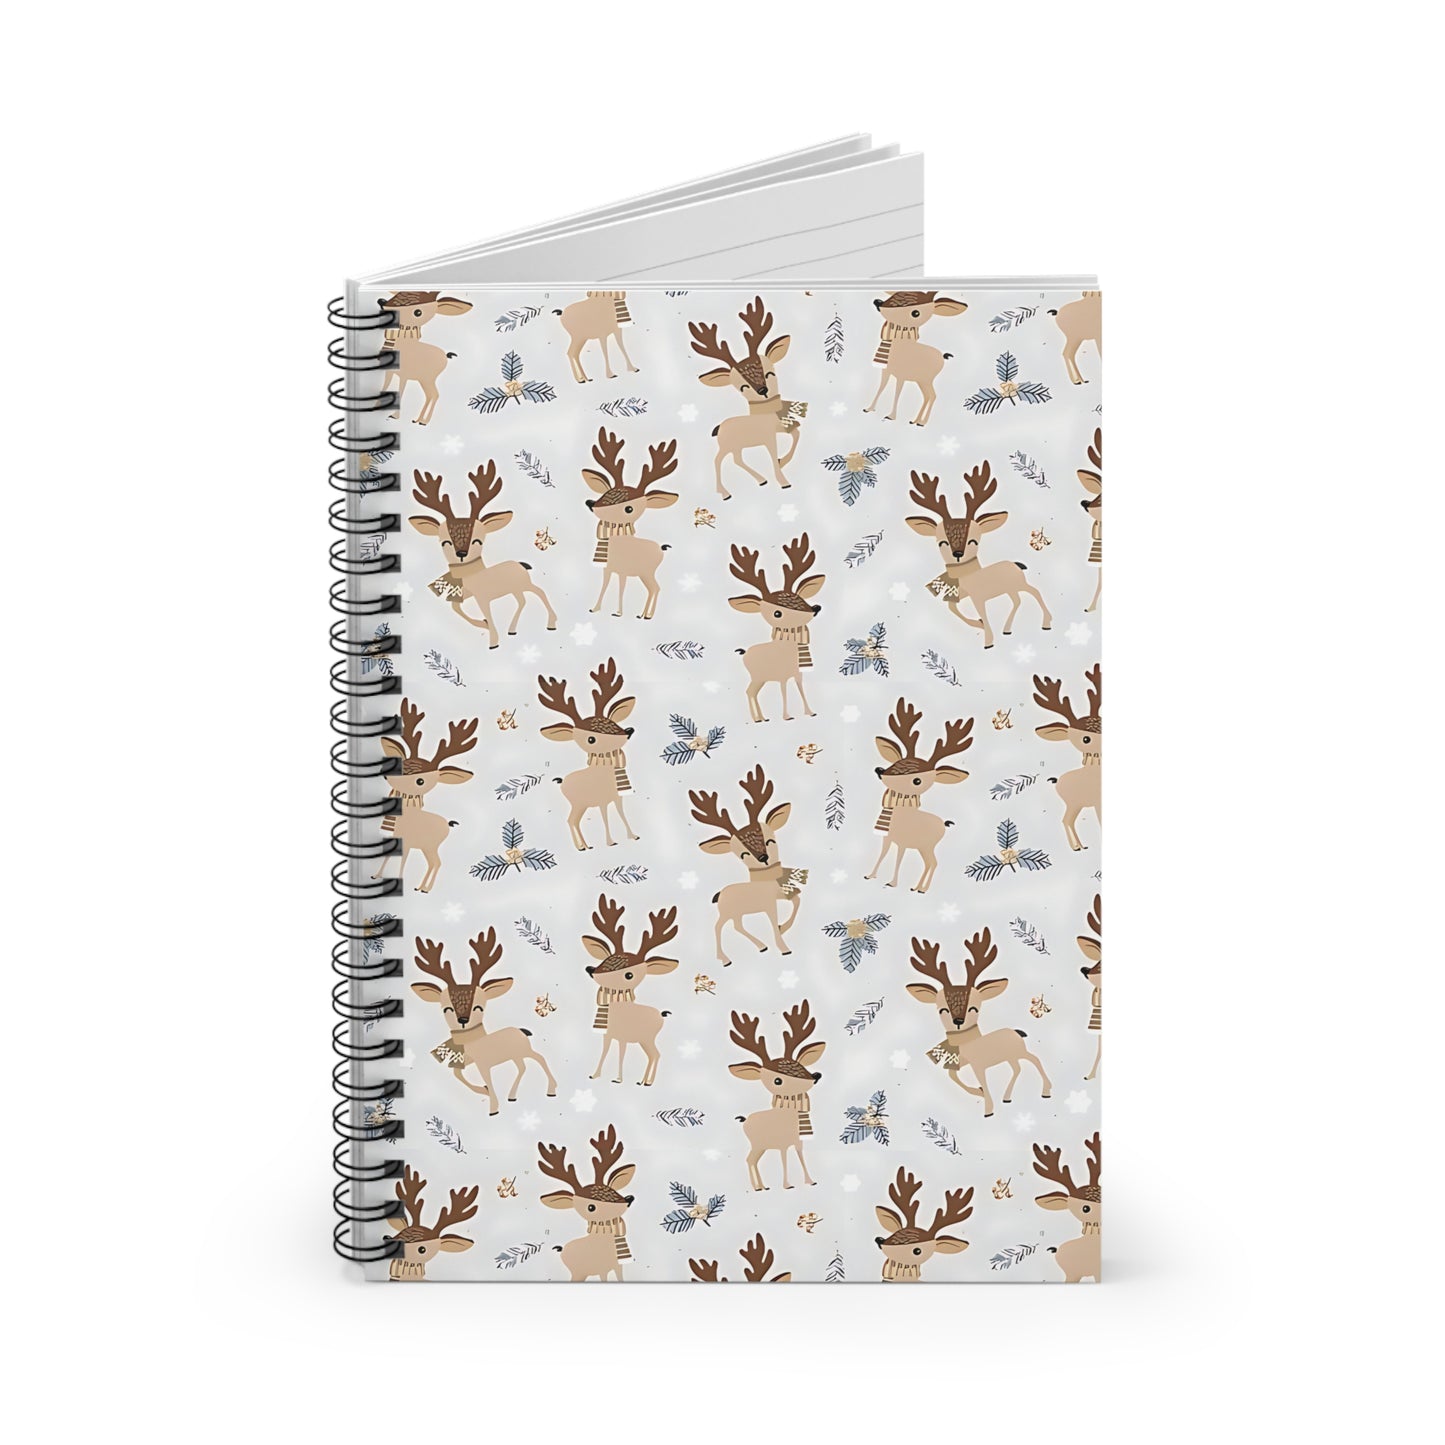 Reindeer Spiral Notebook - Ruled Line